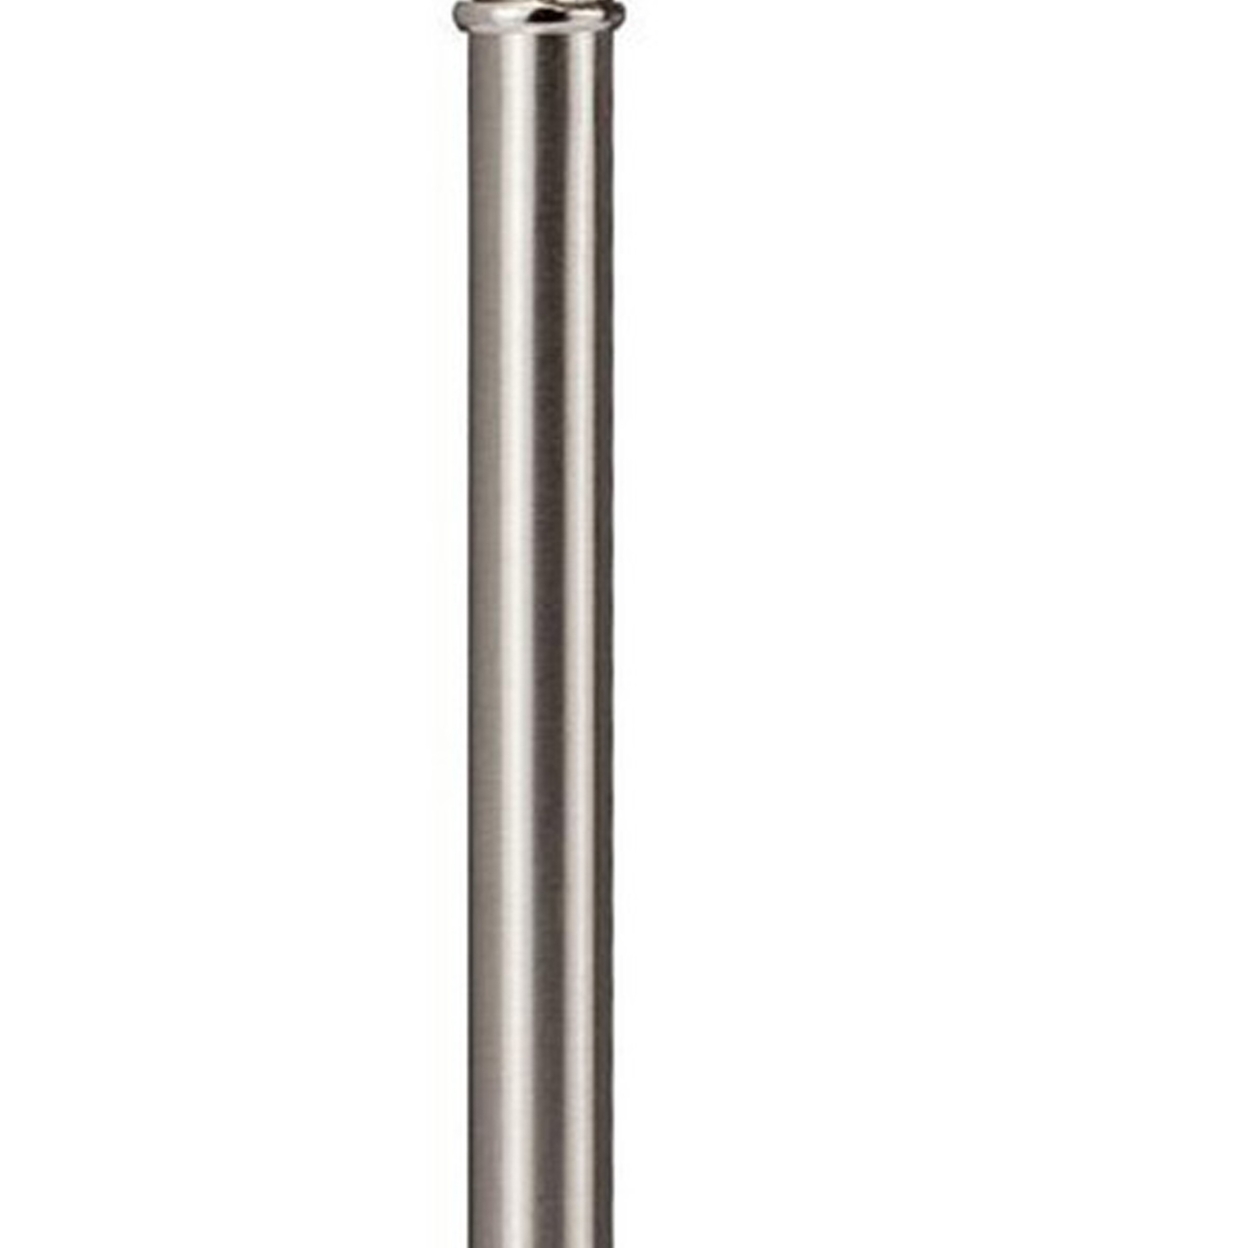 Adjustable Round Shade Metal LED Table Lamp With USB Plugin, Silver- Saltoro Sherpi